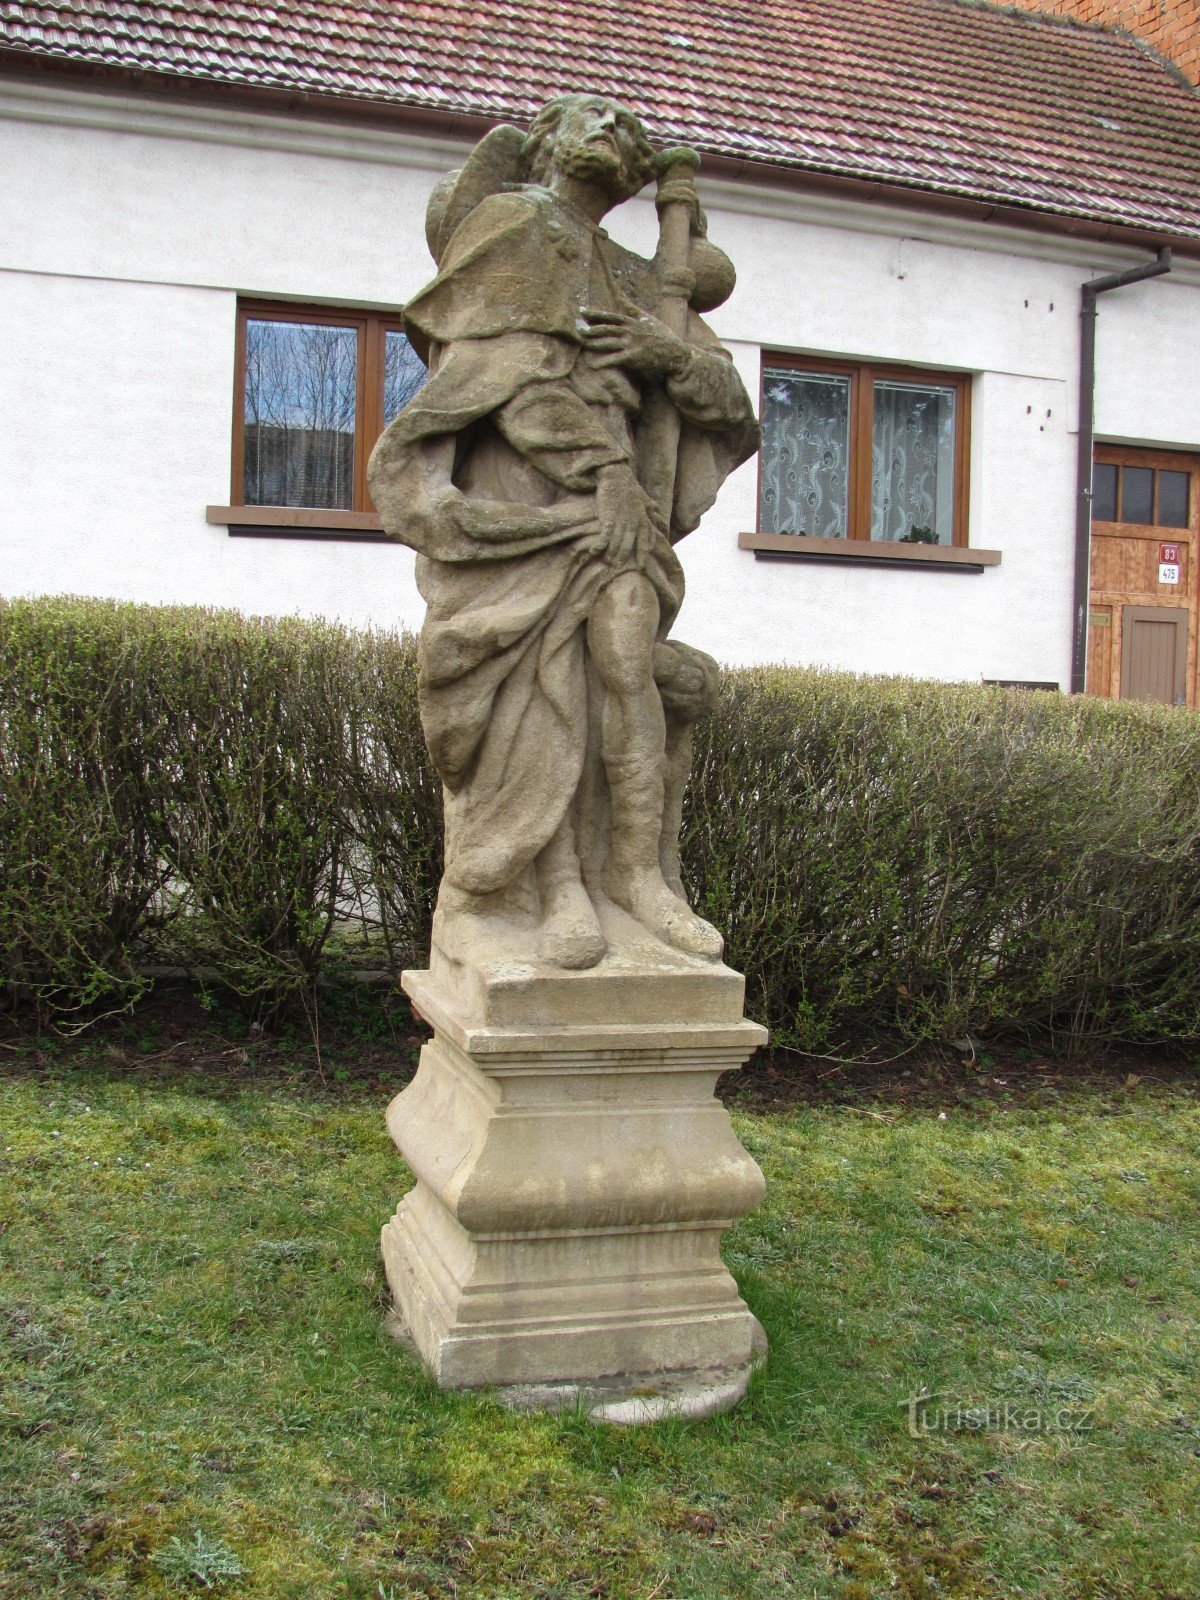 Boskovice - 圣约翰雕像罗查